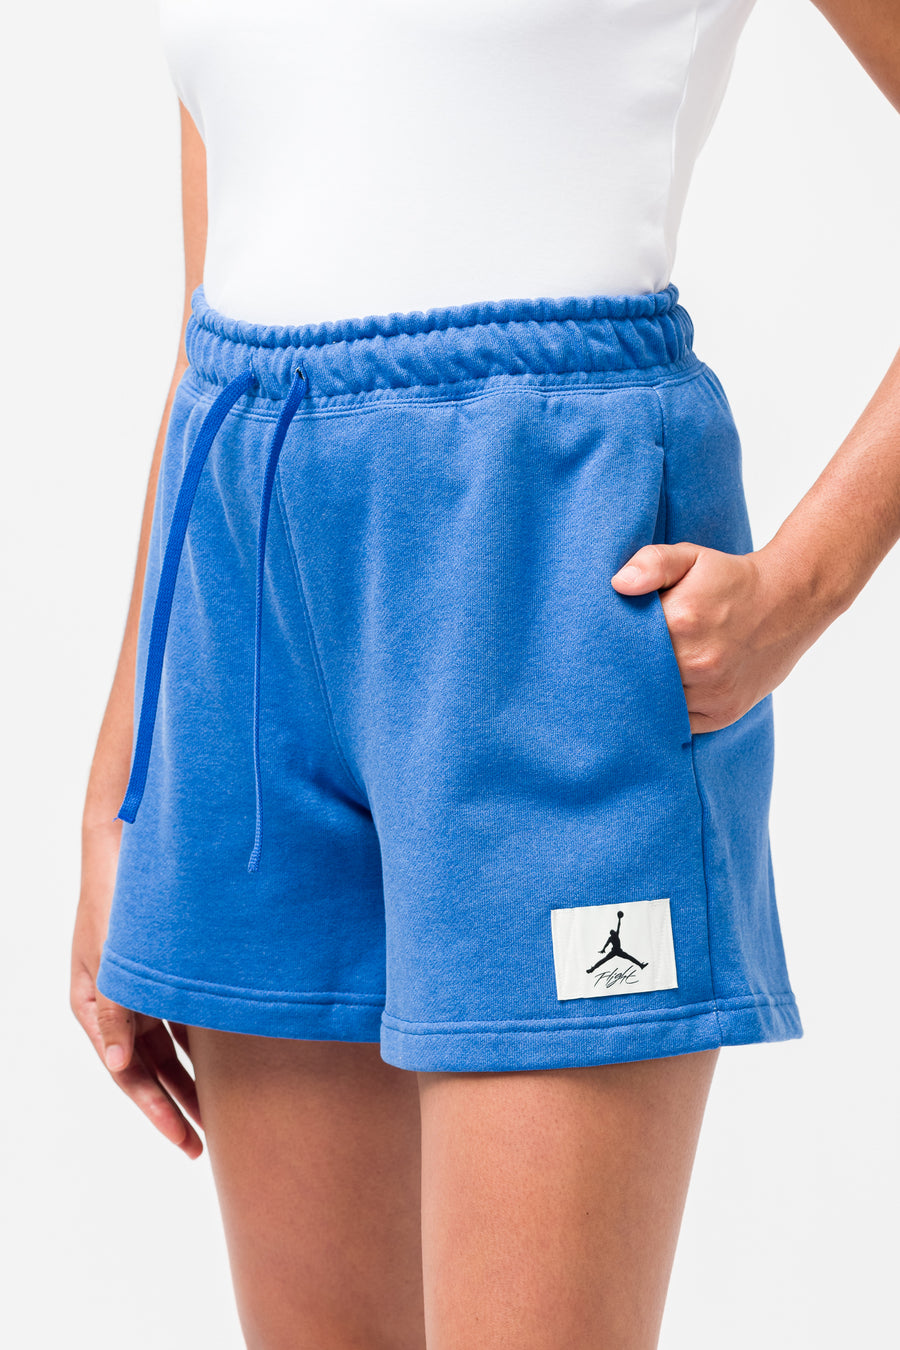 blue jordan fleece shorts